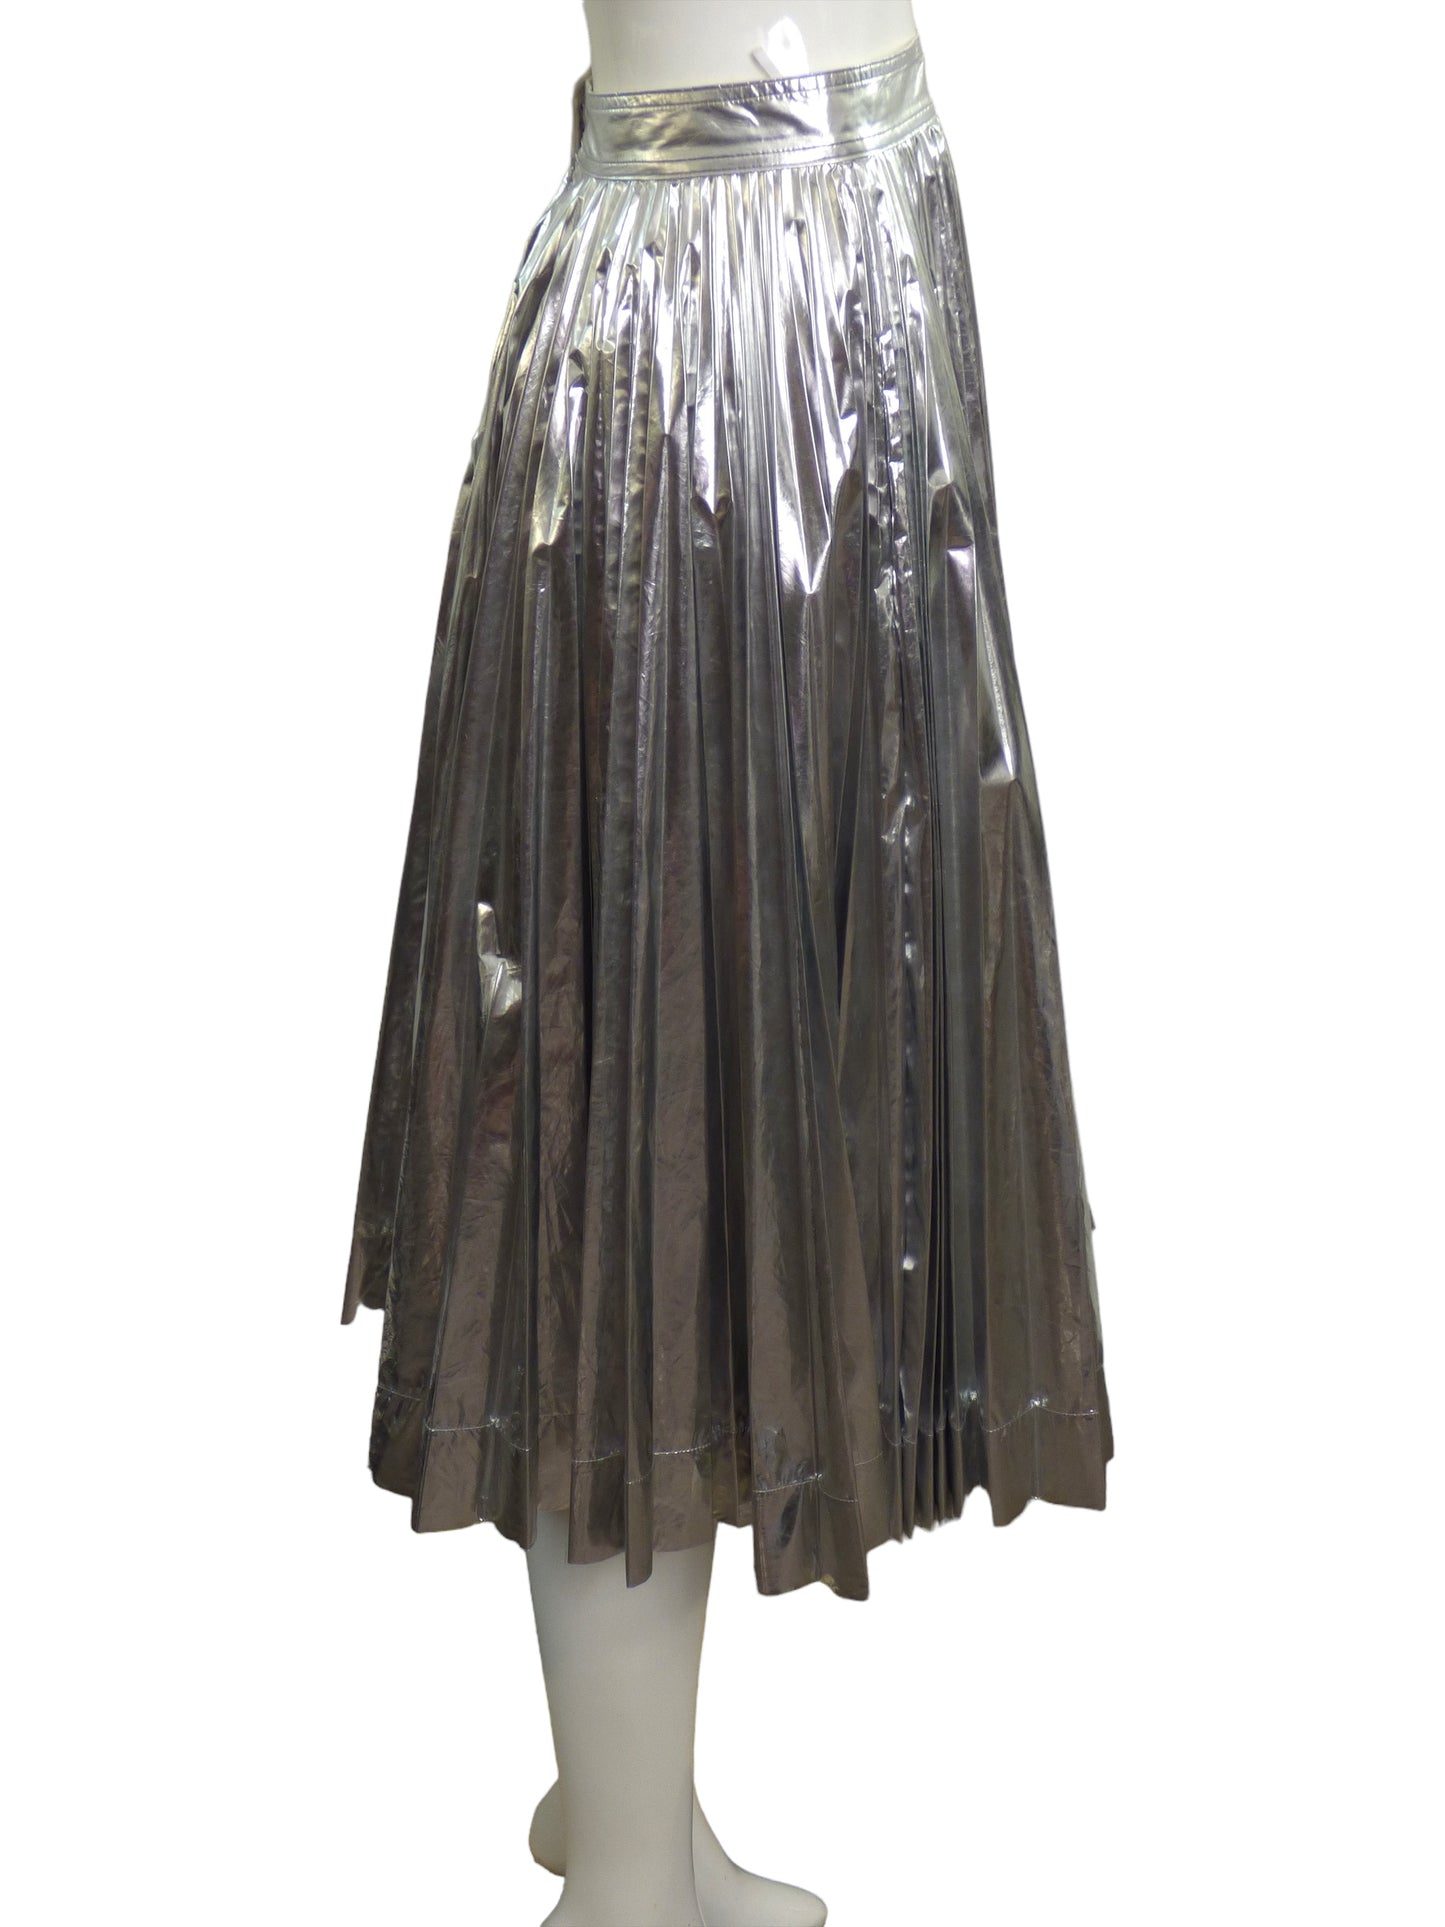 CALVINKLEIN305W39NYC-Silver Accordion Pleat Skirt, Size-8